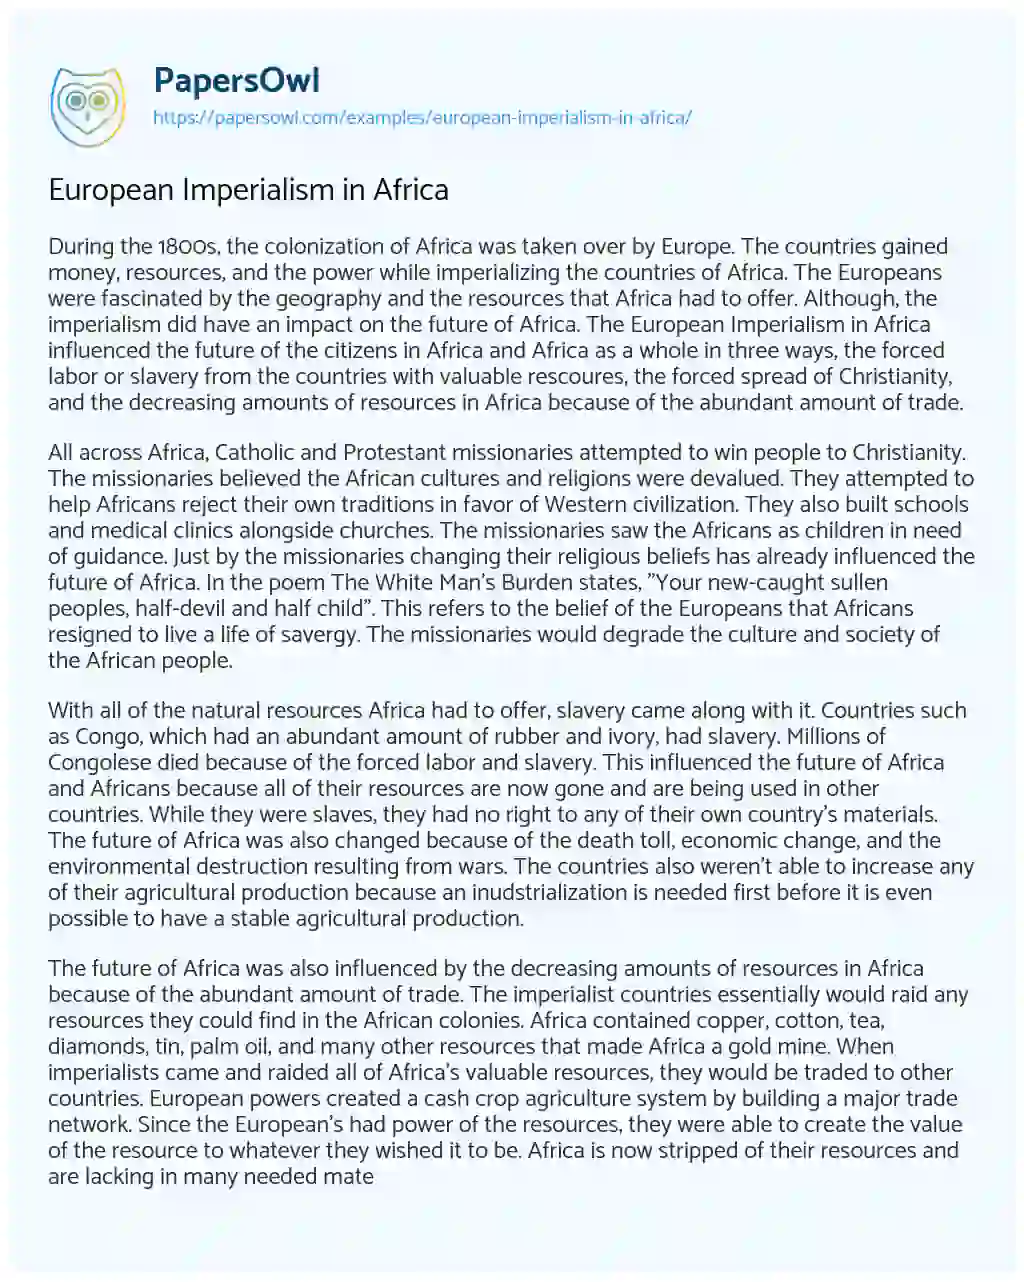 Essay on European Imperialism in Africa